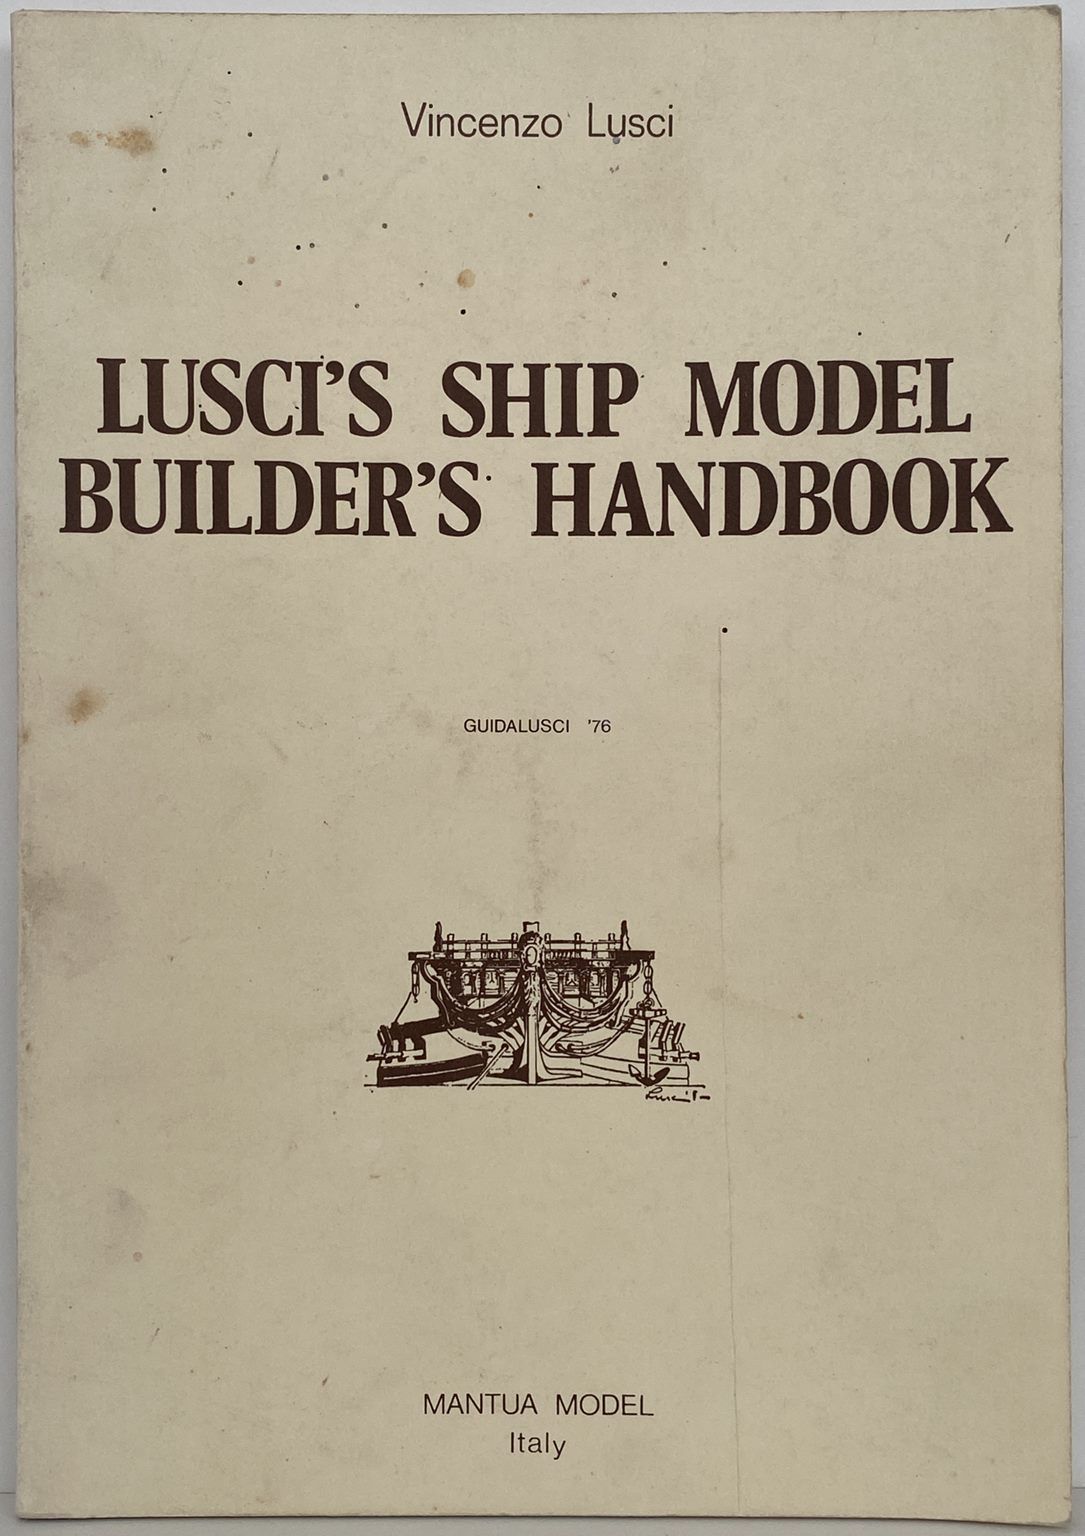 LUSCI'S SHIP MODEL BUILDER'S HANDBOOK